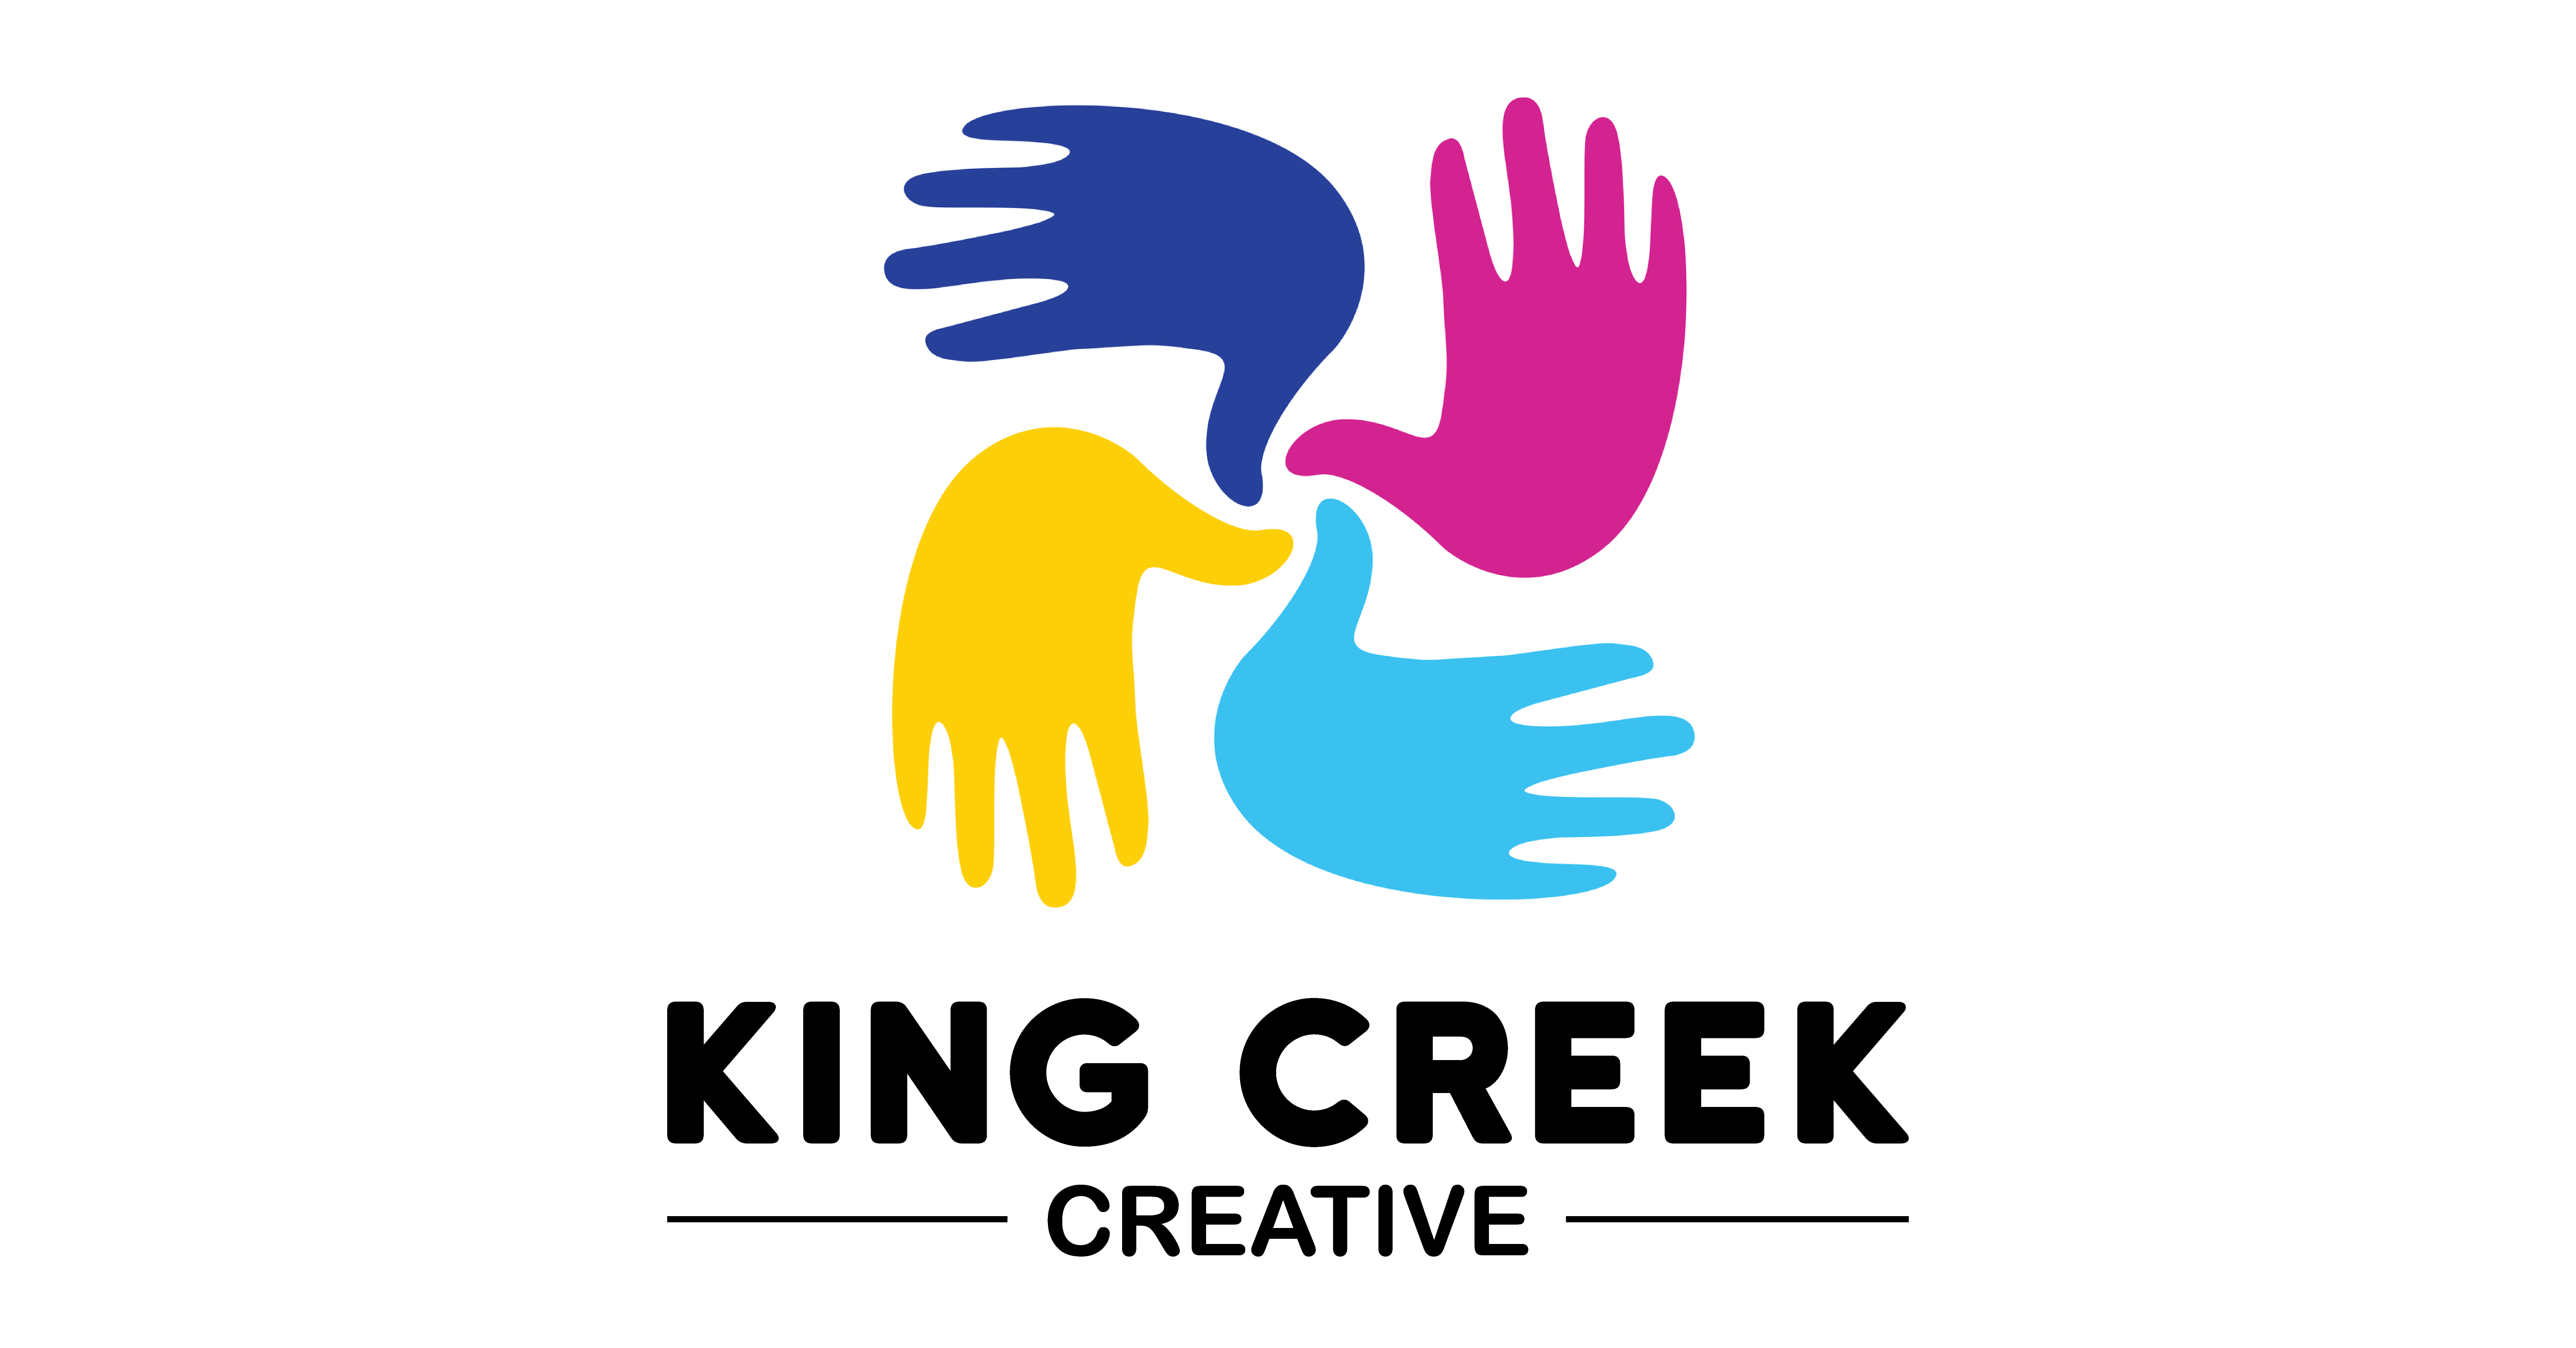 King Creek Creative